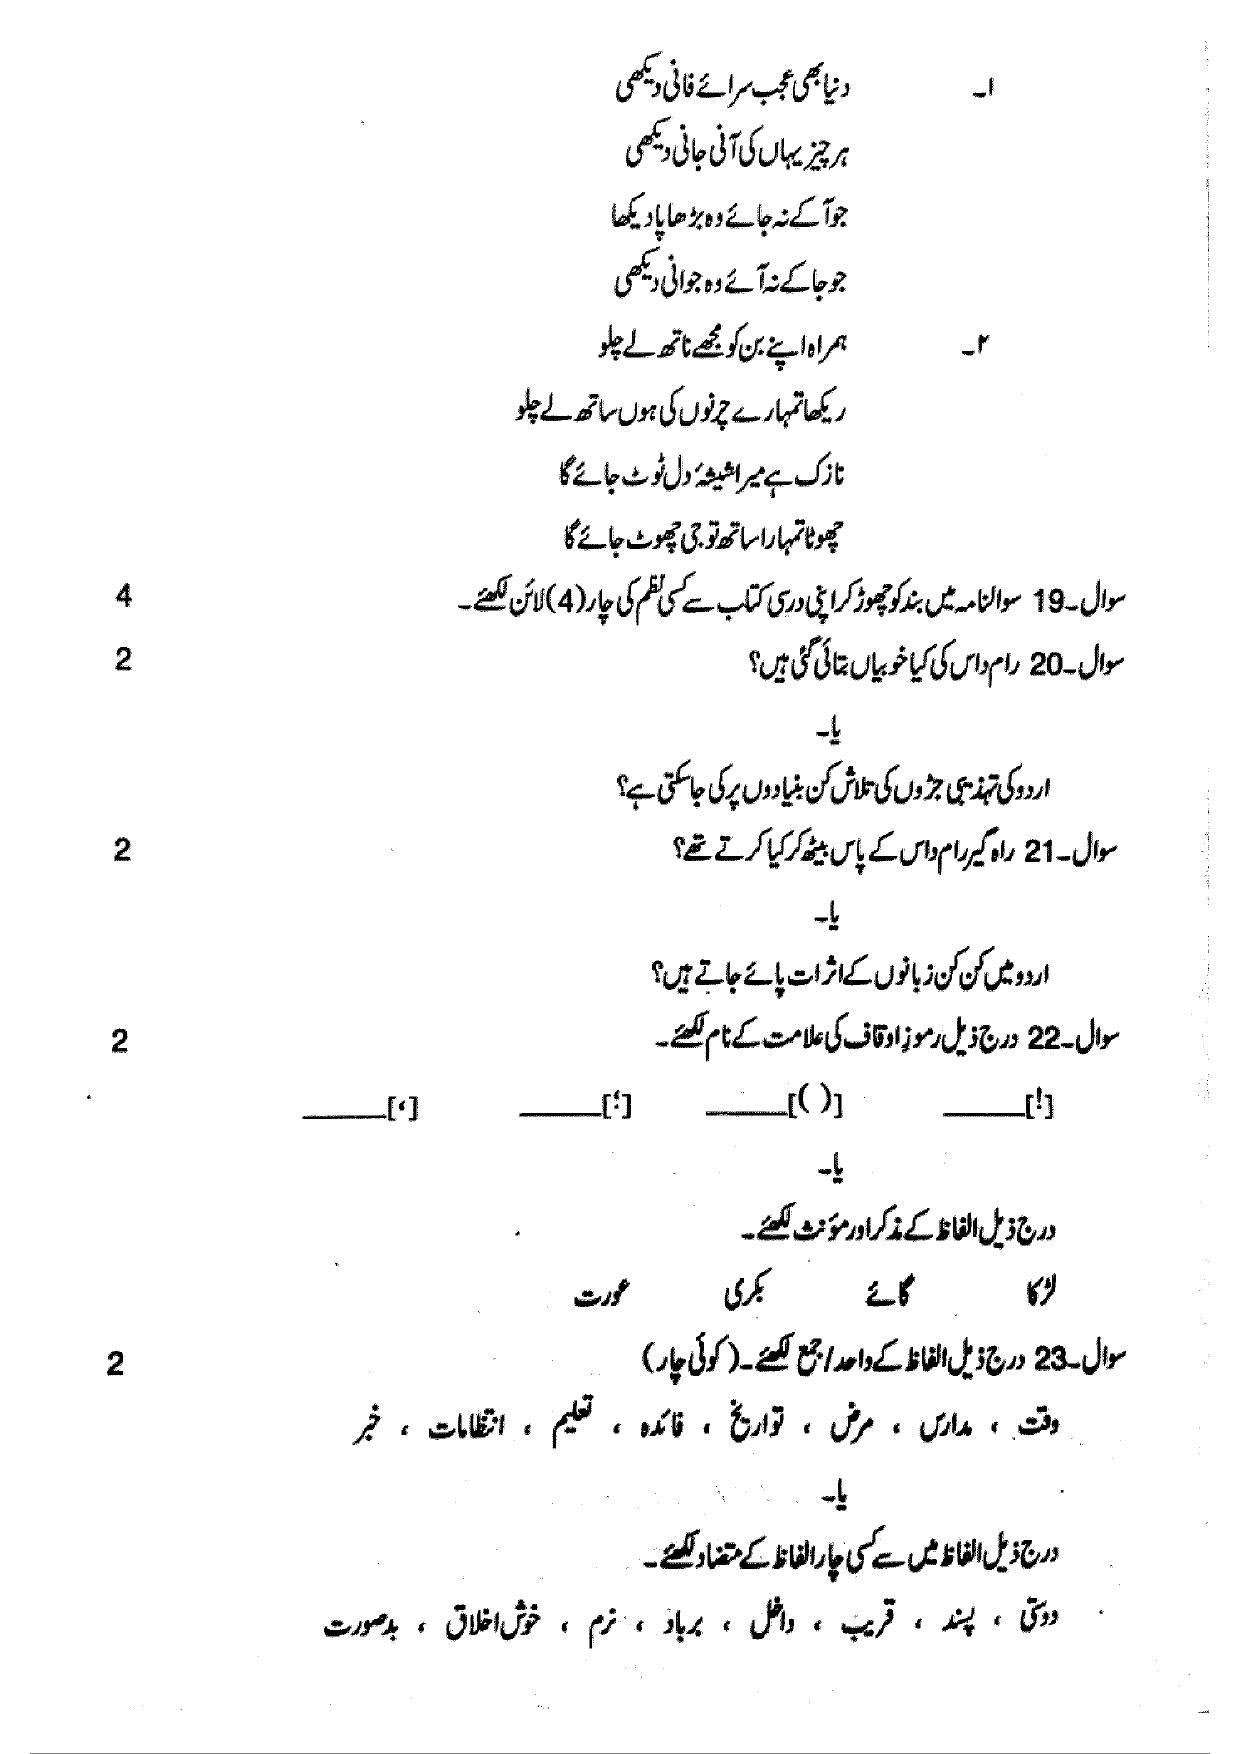 MP Board Class 12 Urdu 2019 Question Paper - Page 5